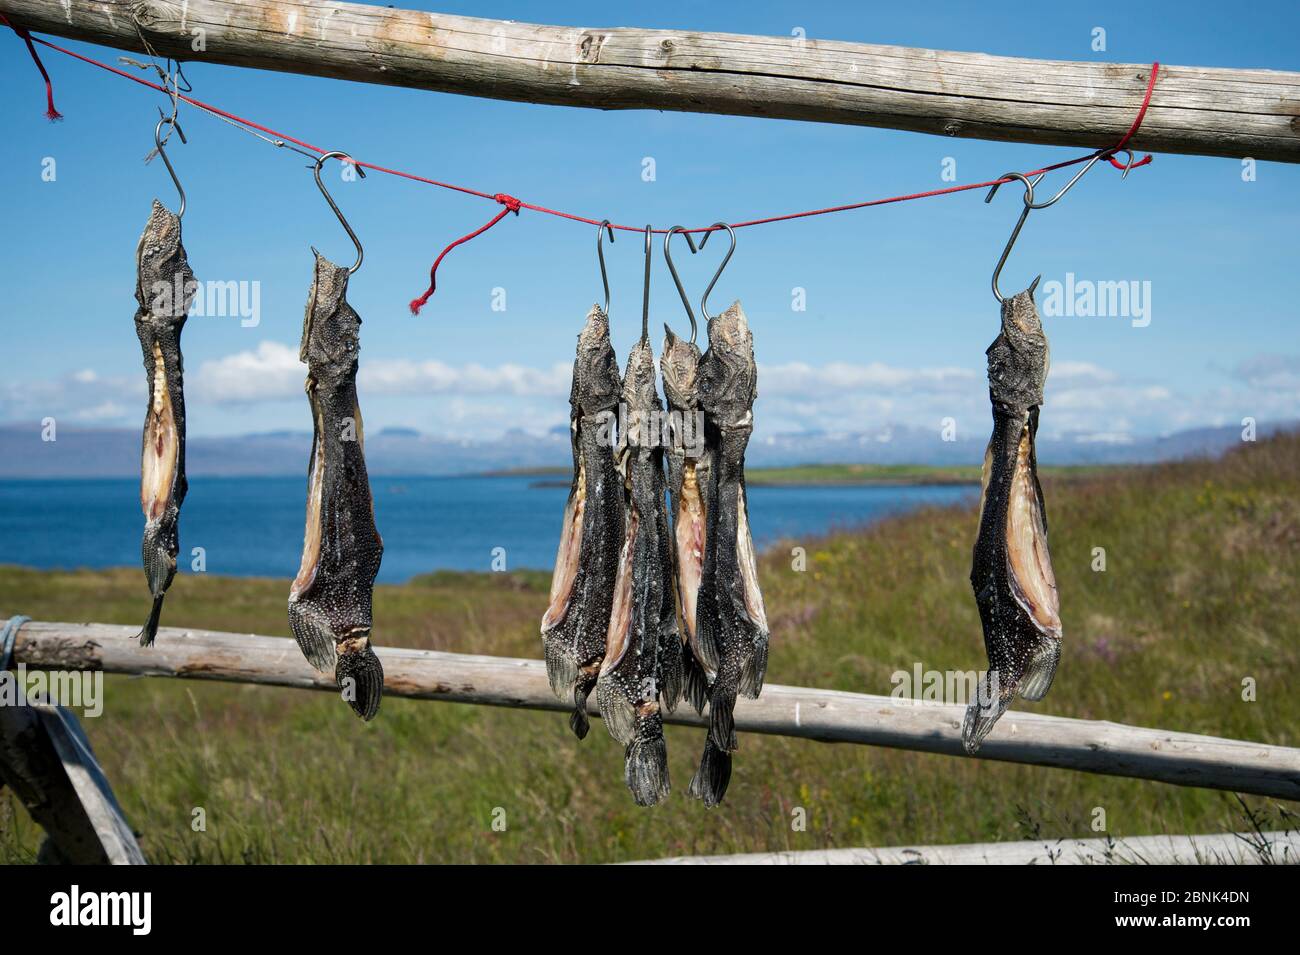 Lumpsucker fish (Cyclopterus lumpus) drying in sun, traditional method of drying fish, Flatey Island, Breioafjorour, Iceland. July Stock Photo